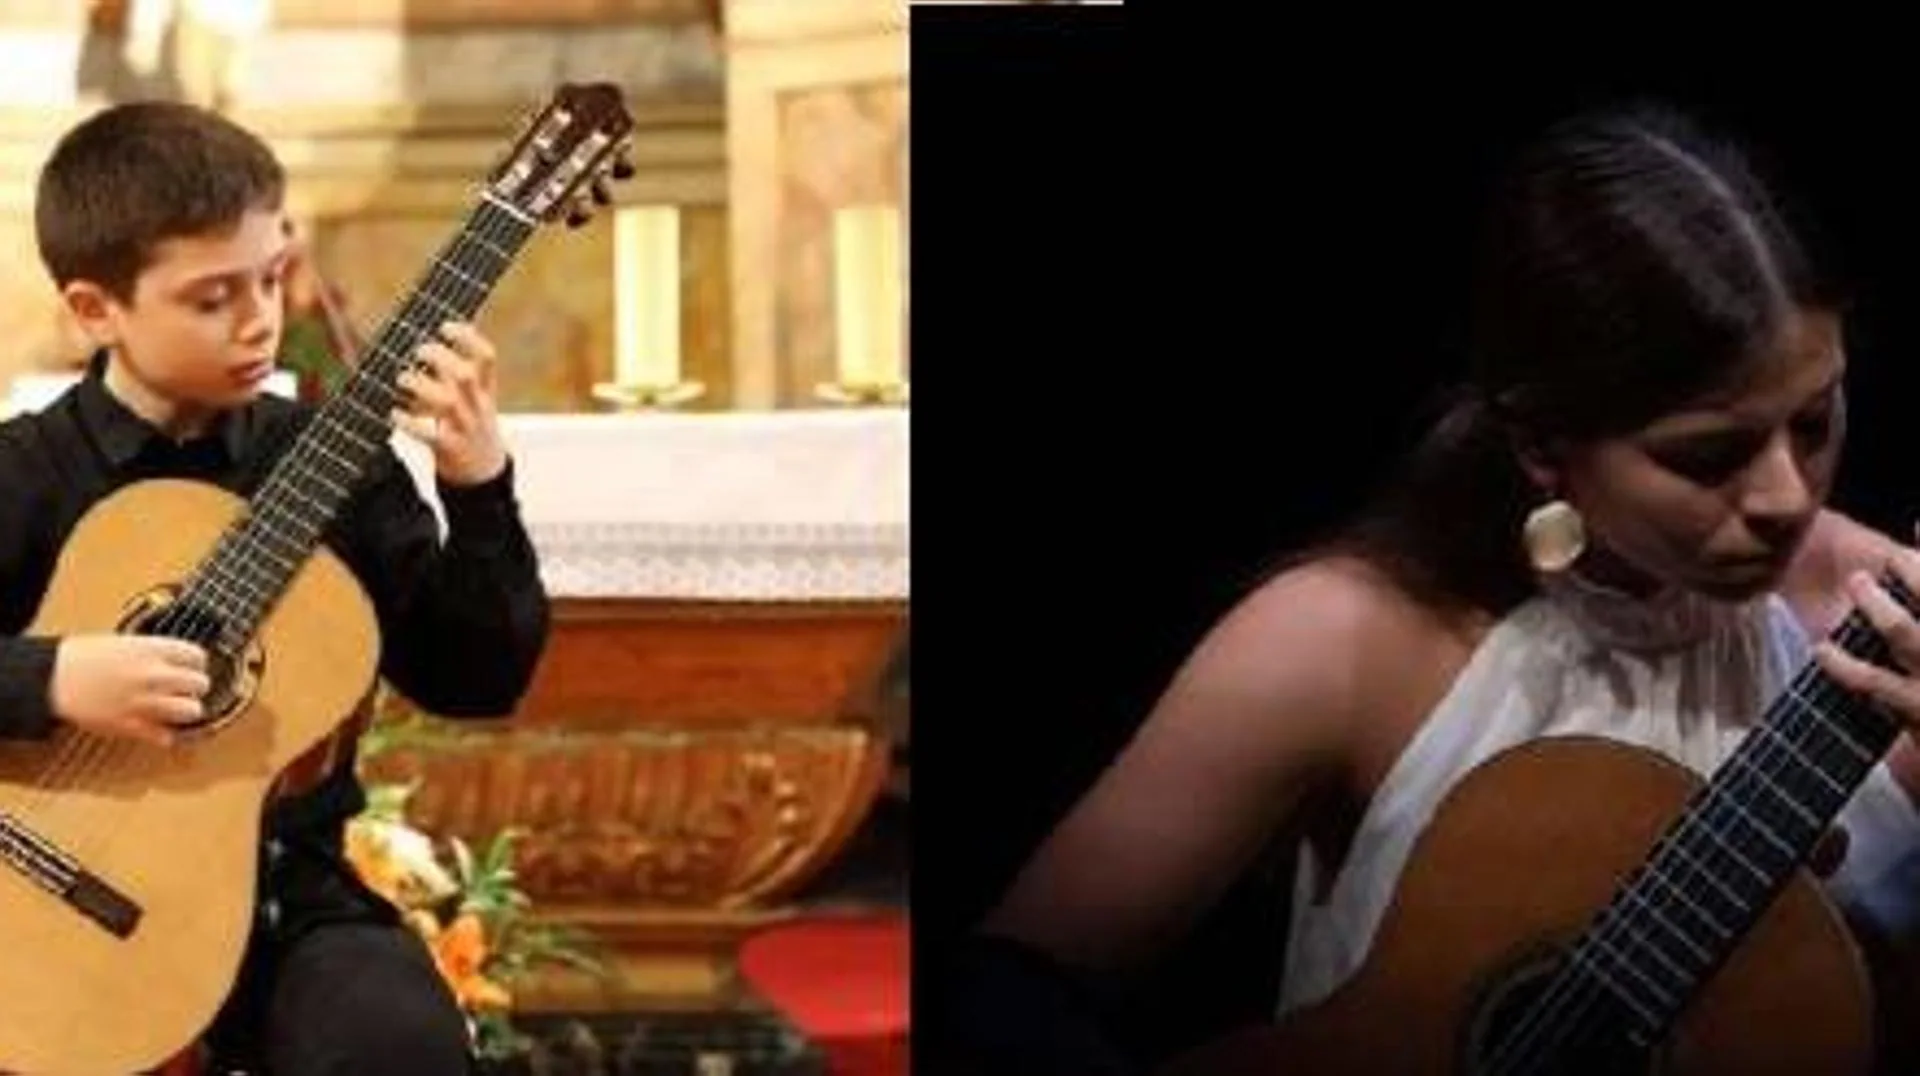 Arroyo de la Luz Hosts the III International Guitar Festival: Featuring Markel Intxaurbe and Joanna Kazoglou